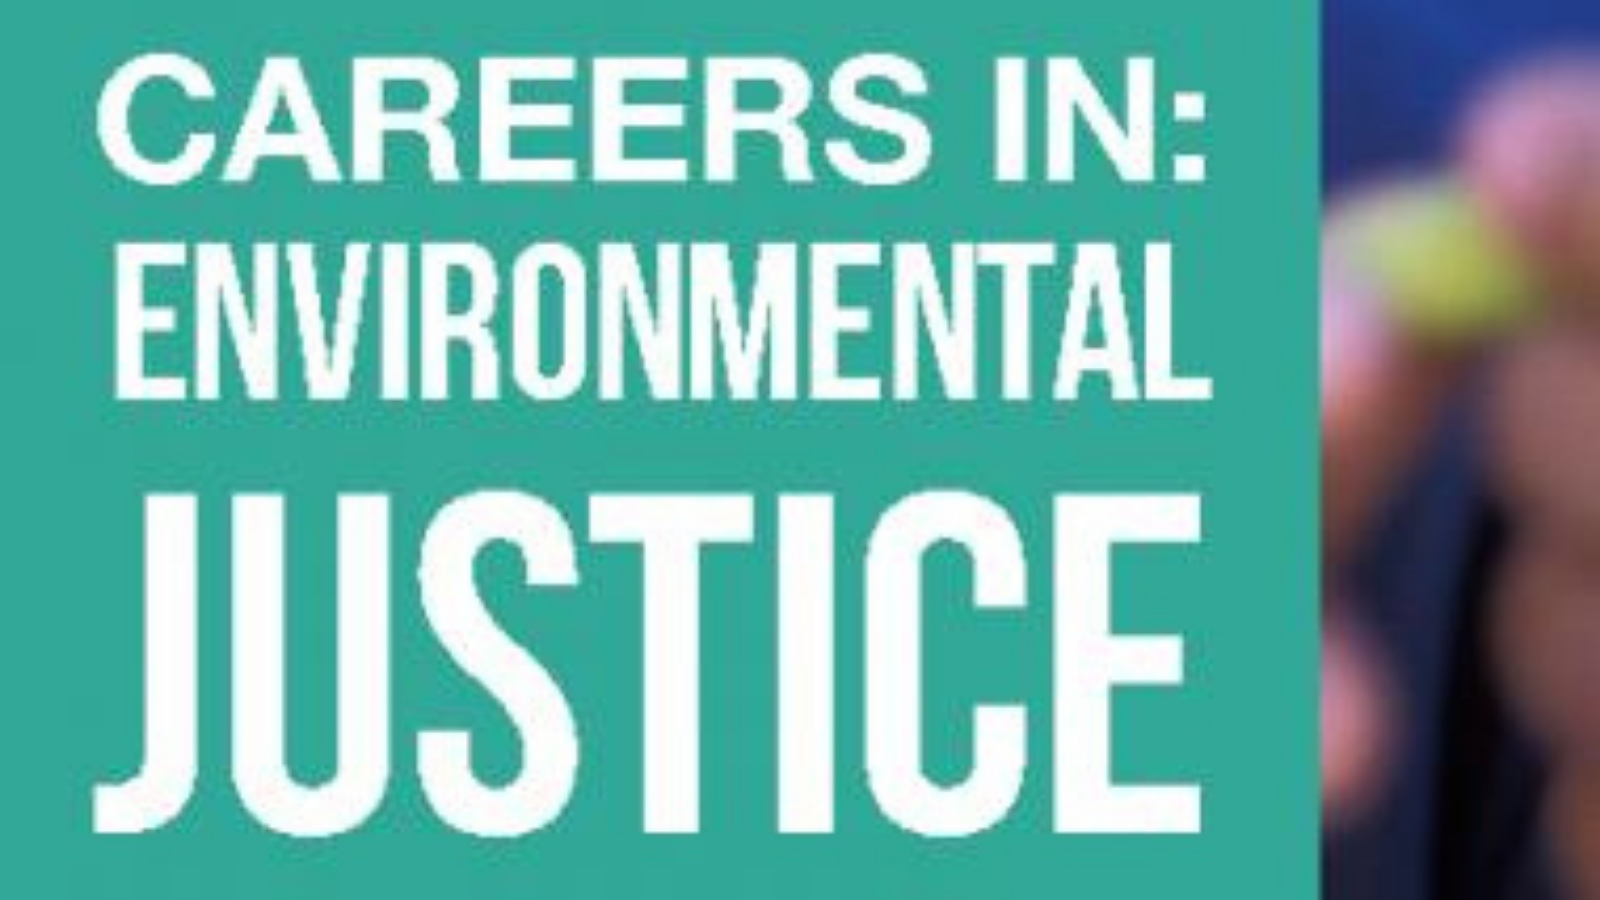 Careers in Environmental Justice inset